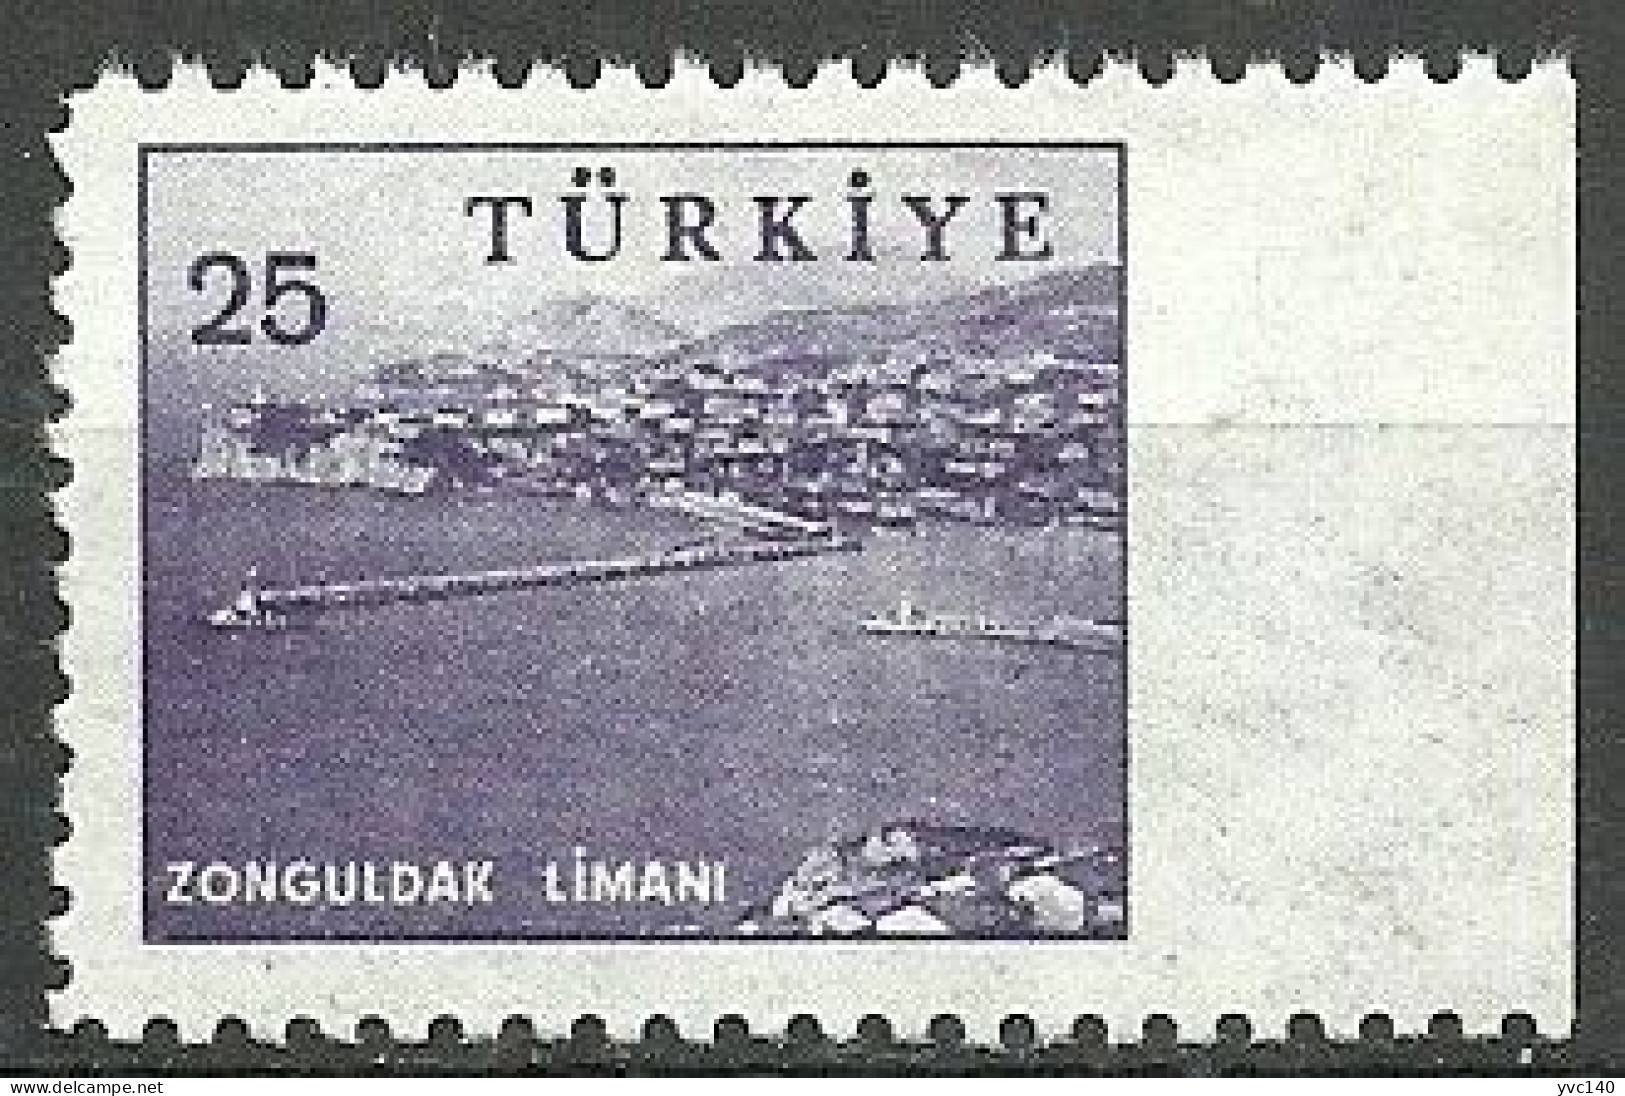 Turkey; 1959 Pictorial Postage Stamp 25 K. ERROR "Imperf. Edge" - Ongebruikt